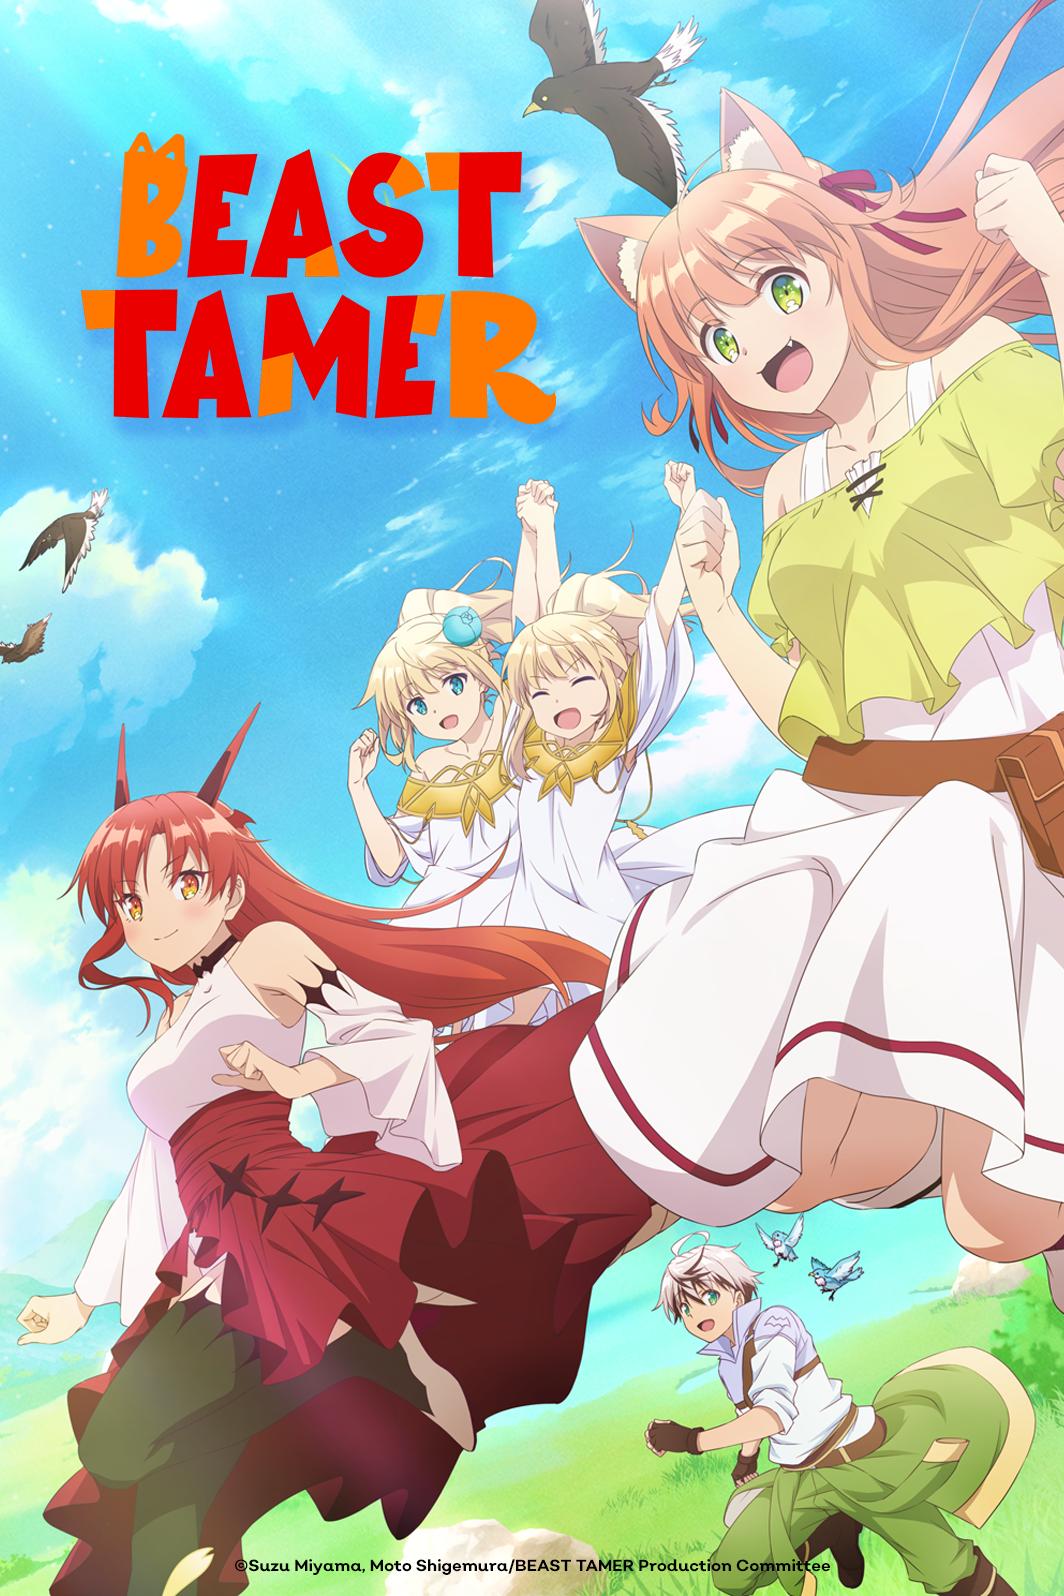 TV ratings for Beast Tamer (勇者パーティーを追放されたビーストテイマー、最強種の猫耳少女と出会う) in Mexico. Tokyo MX TV series